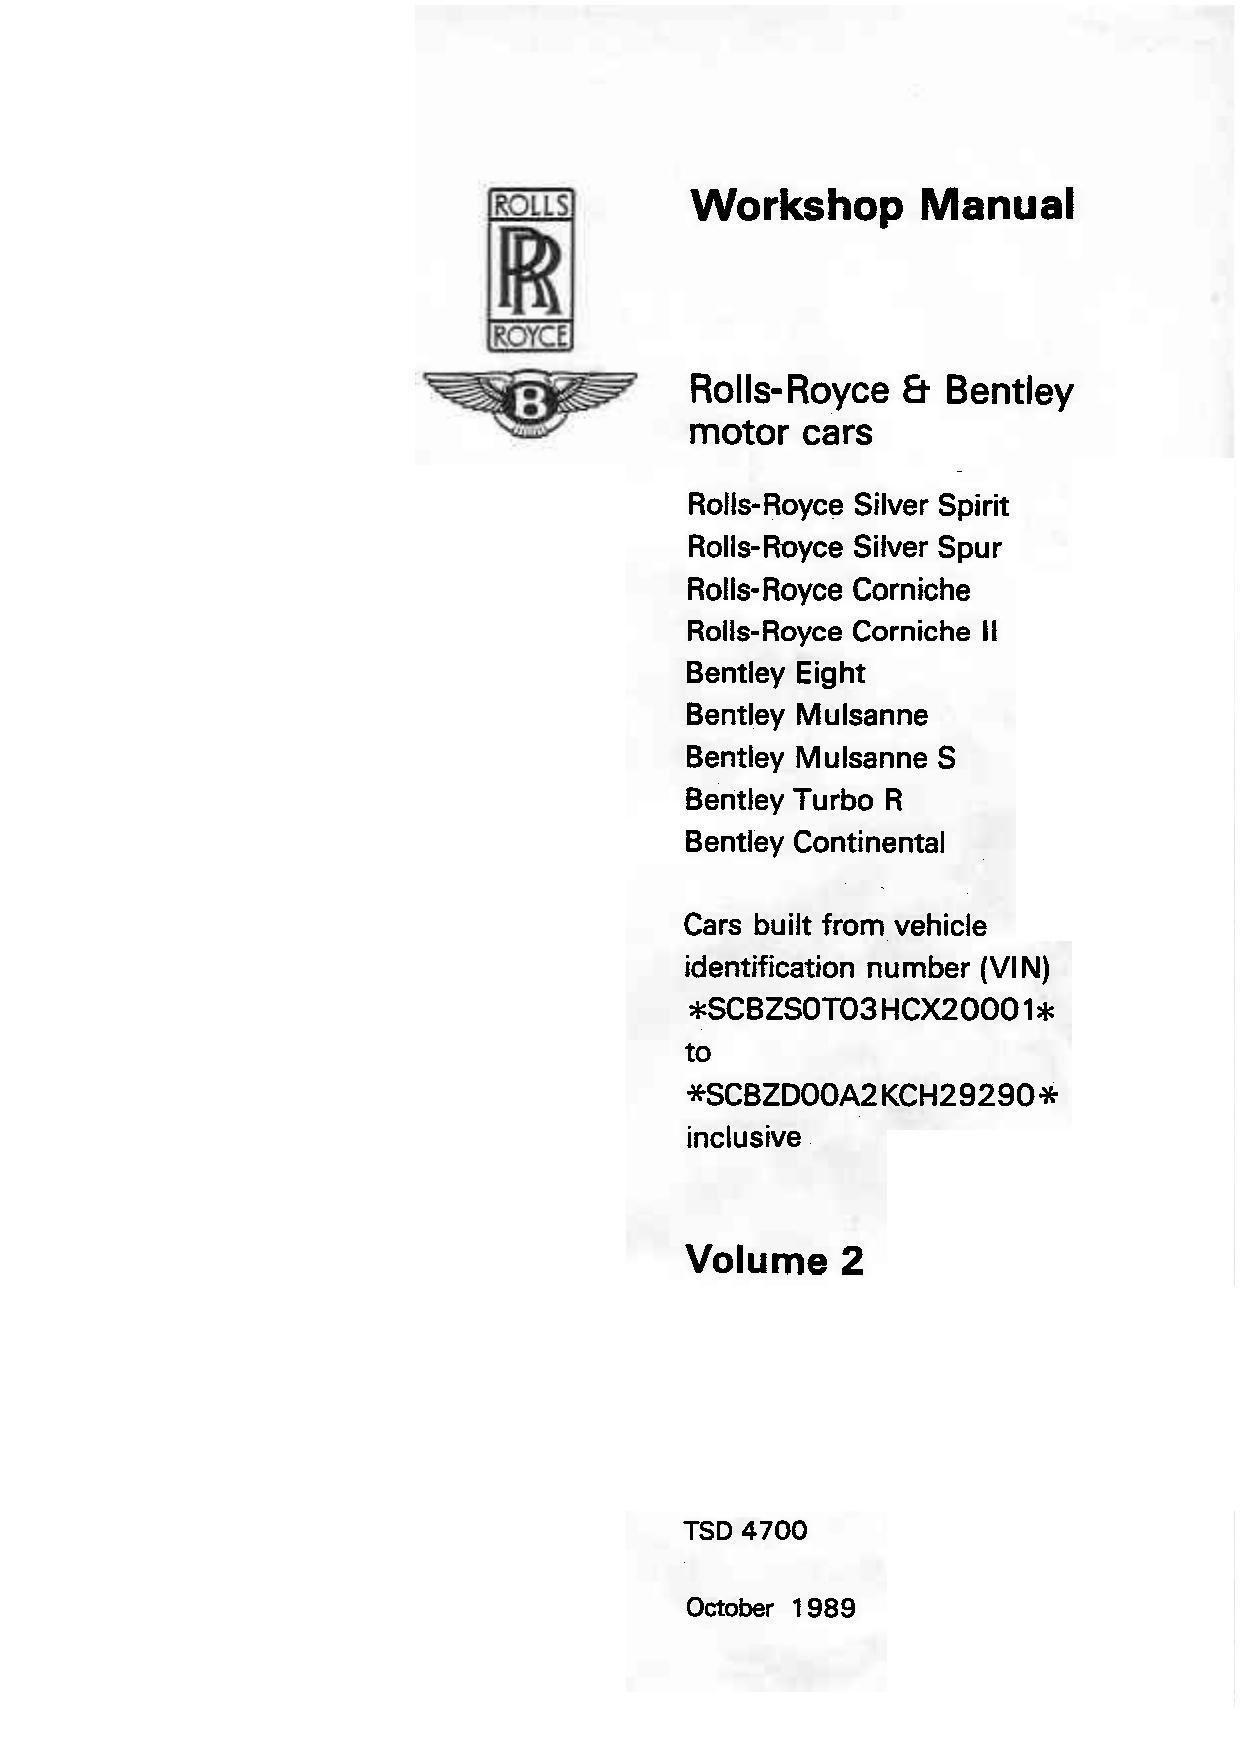 workshop-manual-for-rolls-royce-silver-spirit-rolls-royce-silver-spur-rolls-royce-corniche-rolls-royce-corniche-ii-bentley-eight-bentley-mulsanne-bentley-mulsanne-s-bentley-turbo-r-bentley-continental-1989.pdf